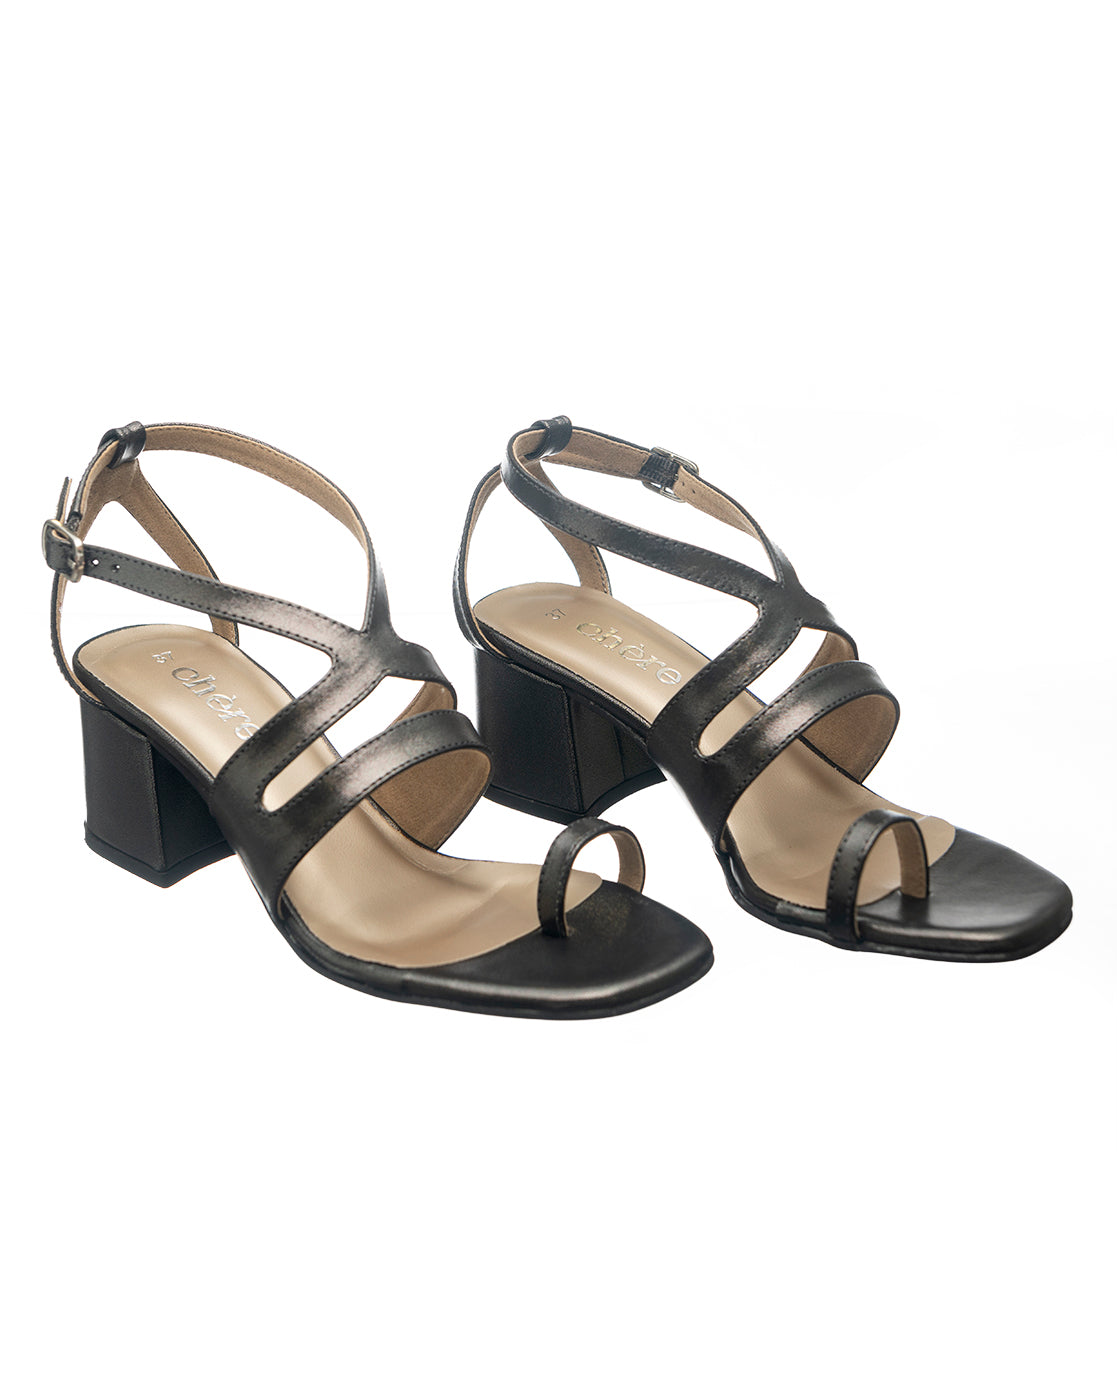 Heeled sandals - Light beige - Ladies | H&M IN